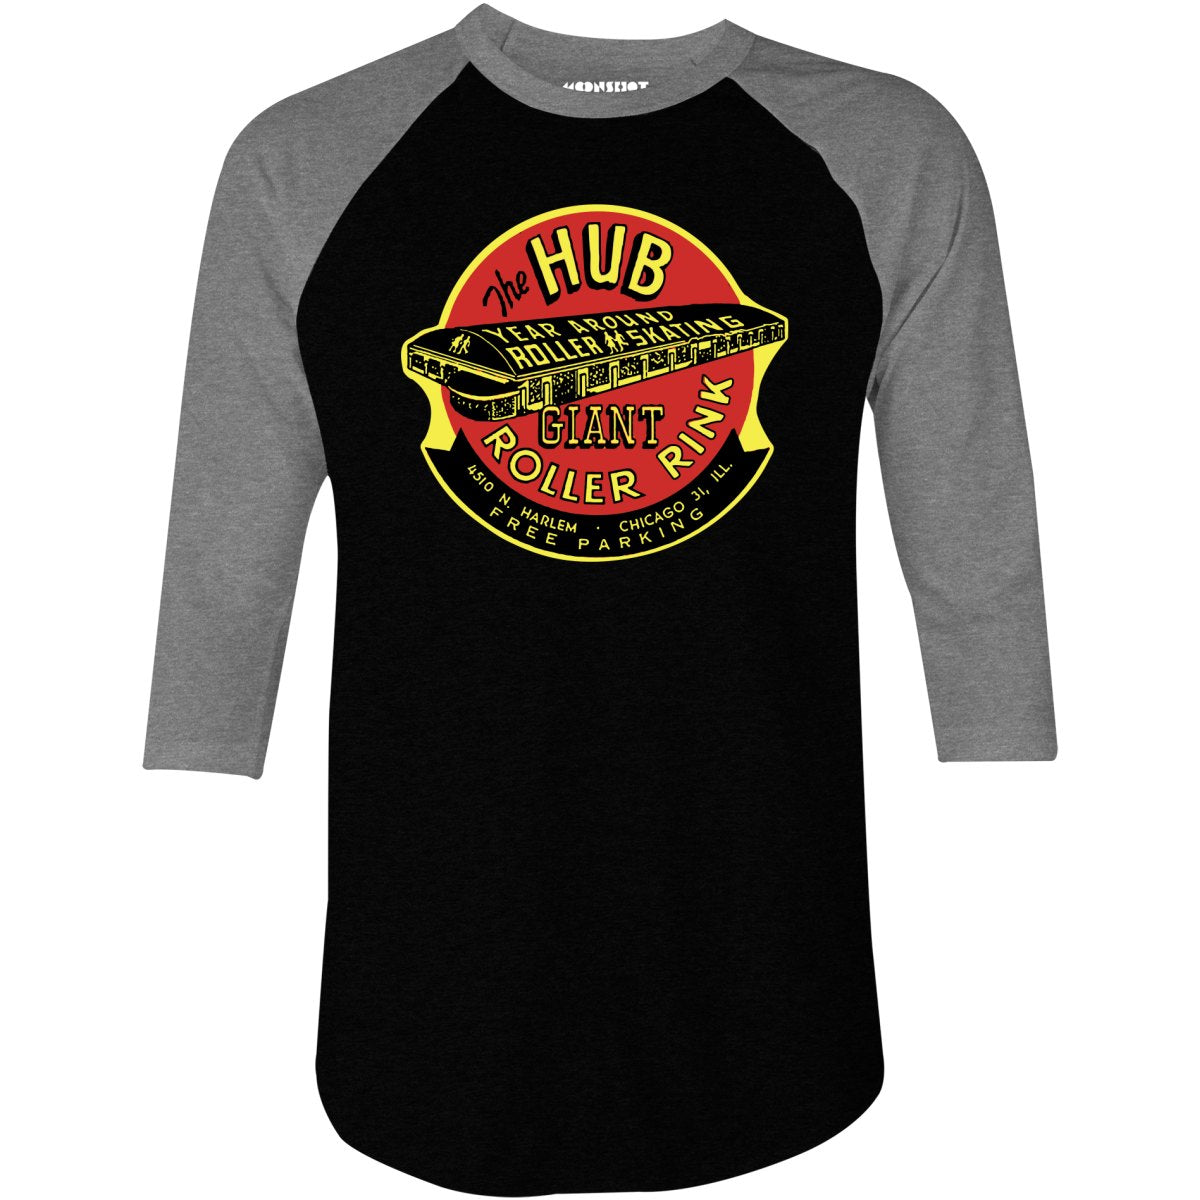 The Hub Roller Rink - Chicago, Illinois - Vintage Roller Rink - 3/4 Sleeve Raglan T-Shirt